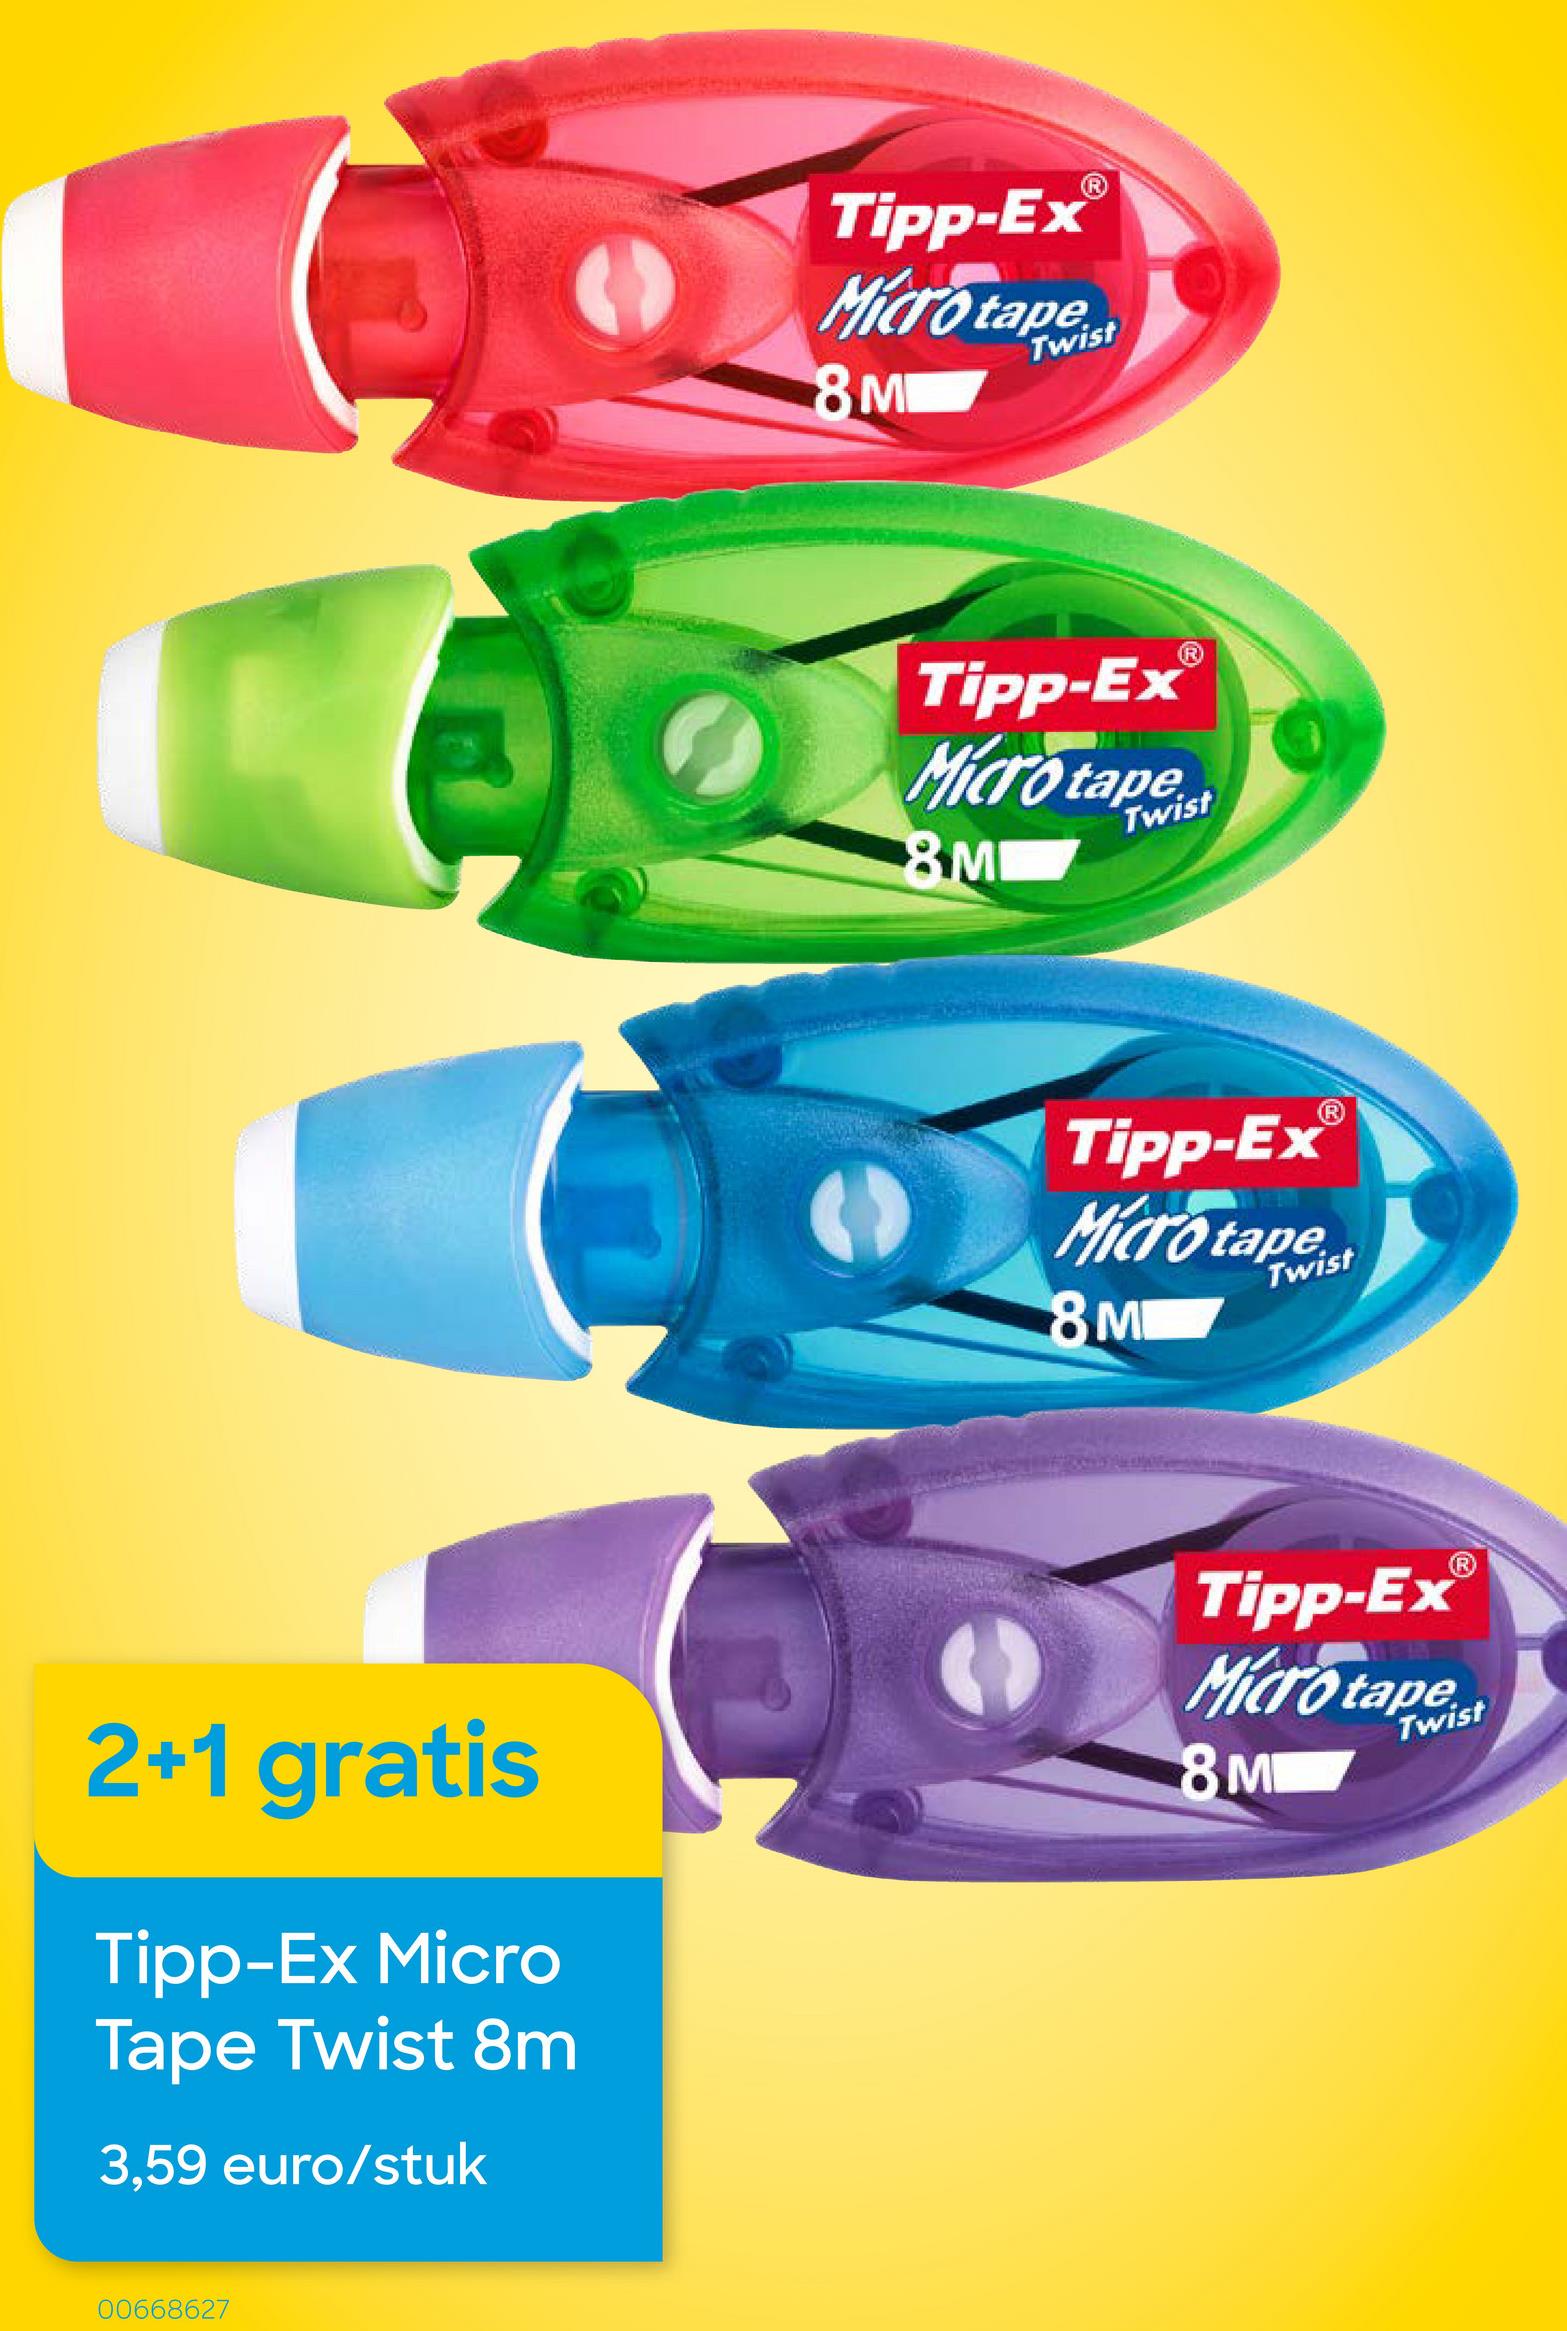 2+1 gratis
Tipp-Ex Micro
Tape Twist 8m
3,59 euro/stuk
00668627
Tipp-Ex
Micro
8M
apist
Tipp-Ex
Micro tape
8M
Tipp-Ex
Micro tape
8 M
Tipp-Ex
Micro tape
8M
Twist